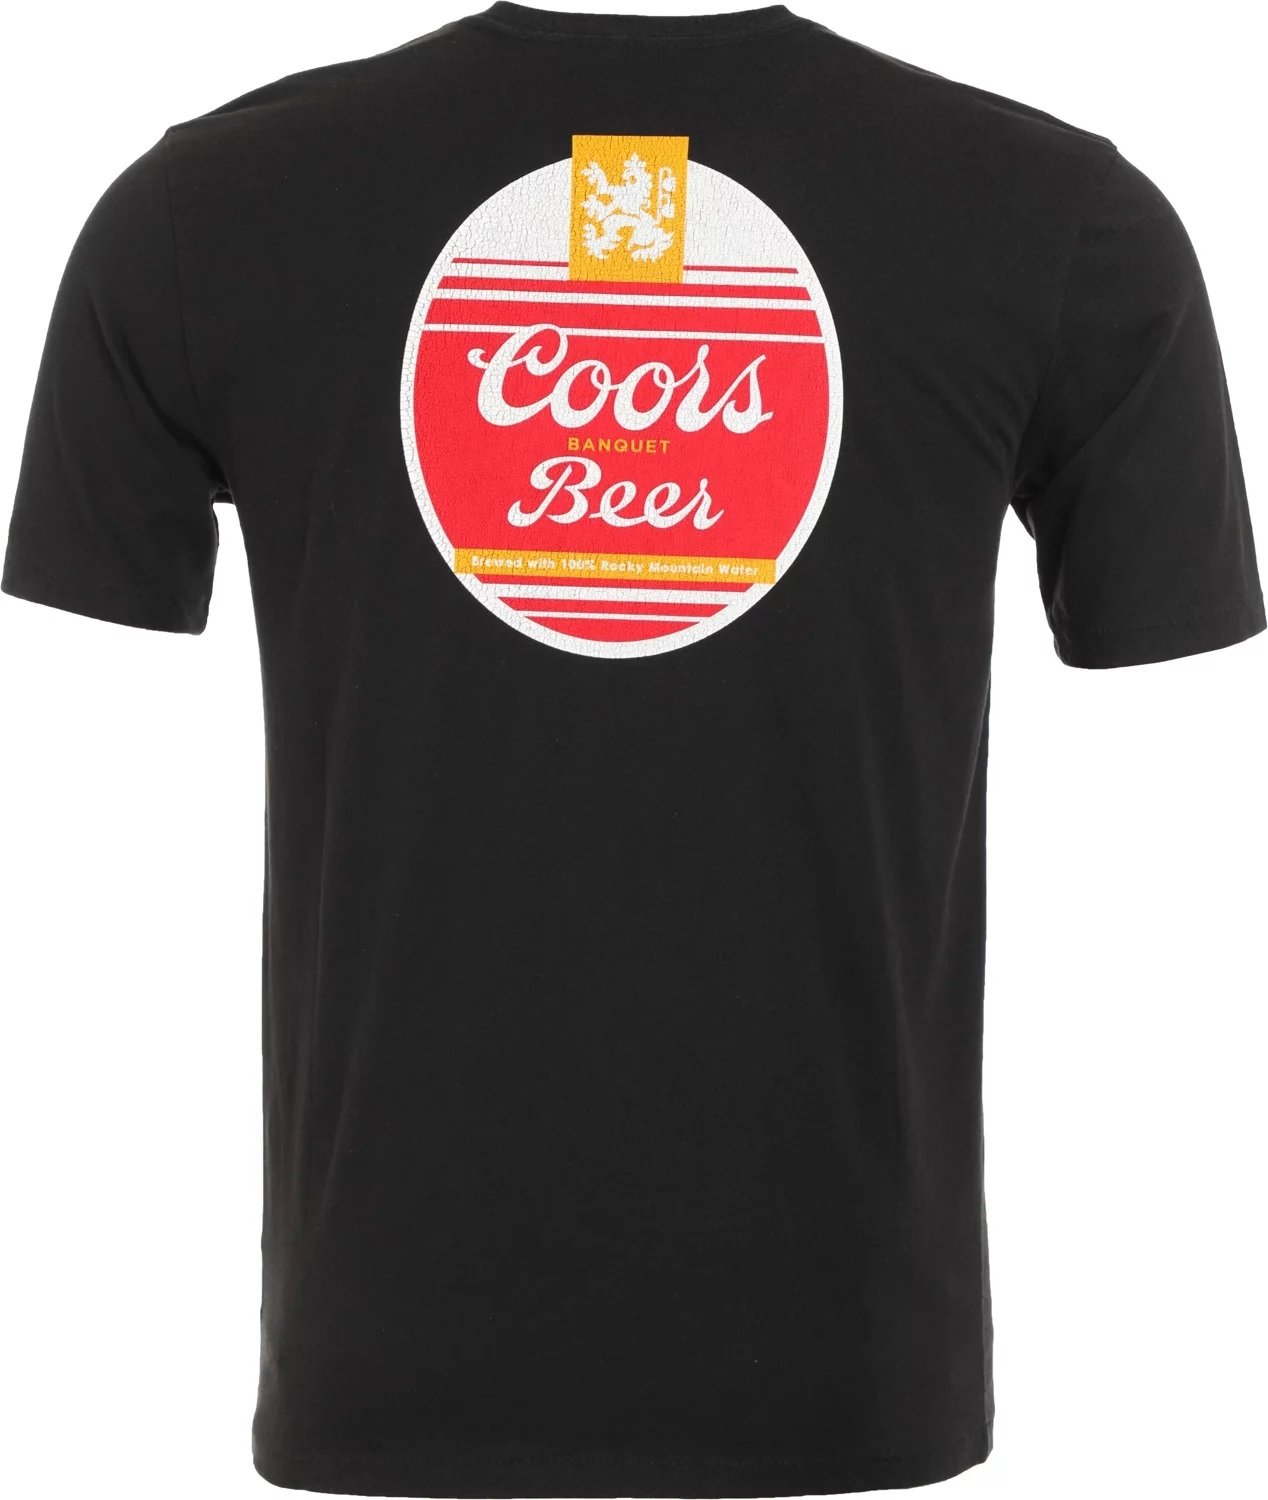 AFTCO Men's Root Beer SS T-Shirt - Bahama Heather - 2x